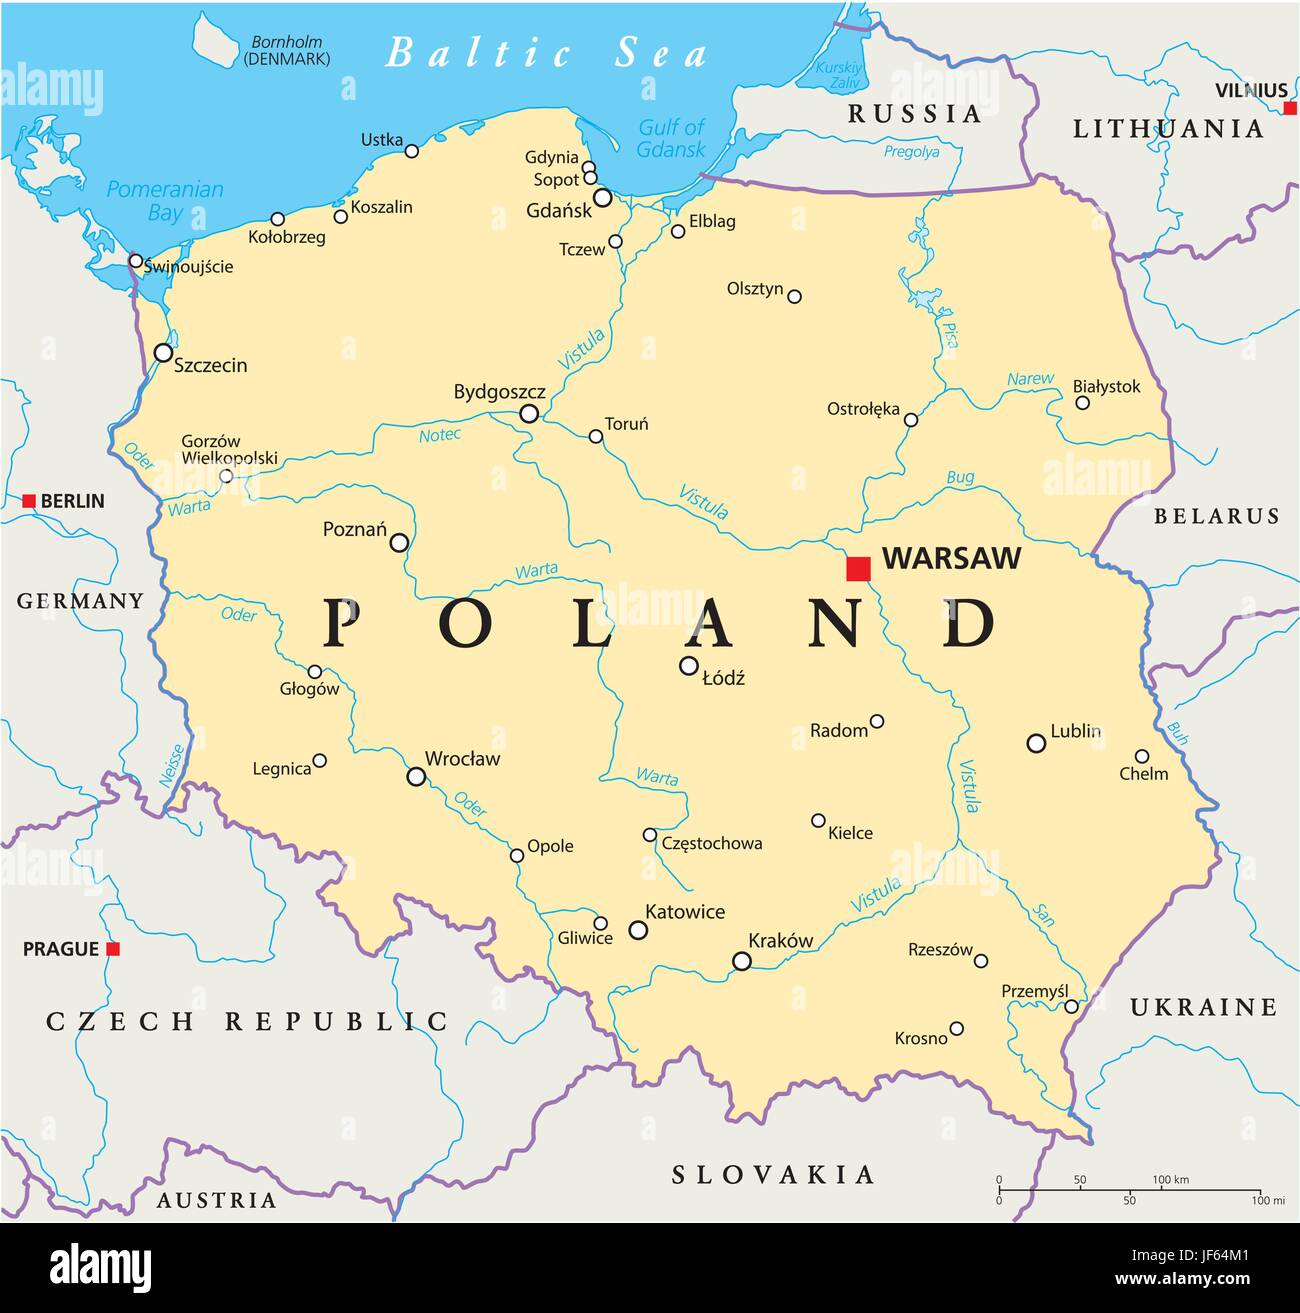 Poland Warsaw Map Atlas Map Of The World Krakow Travel